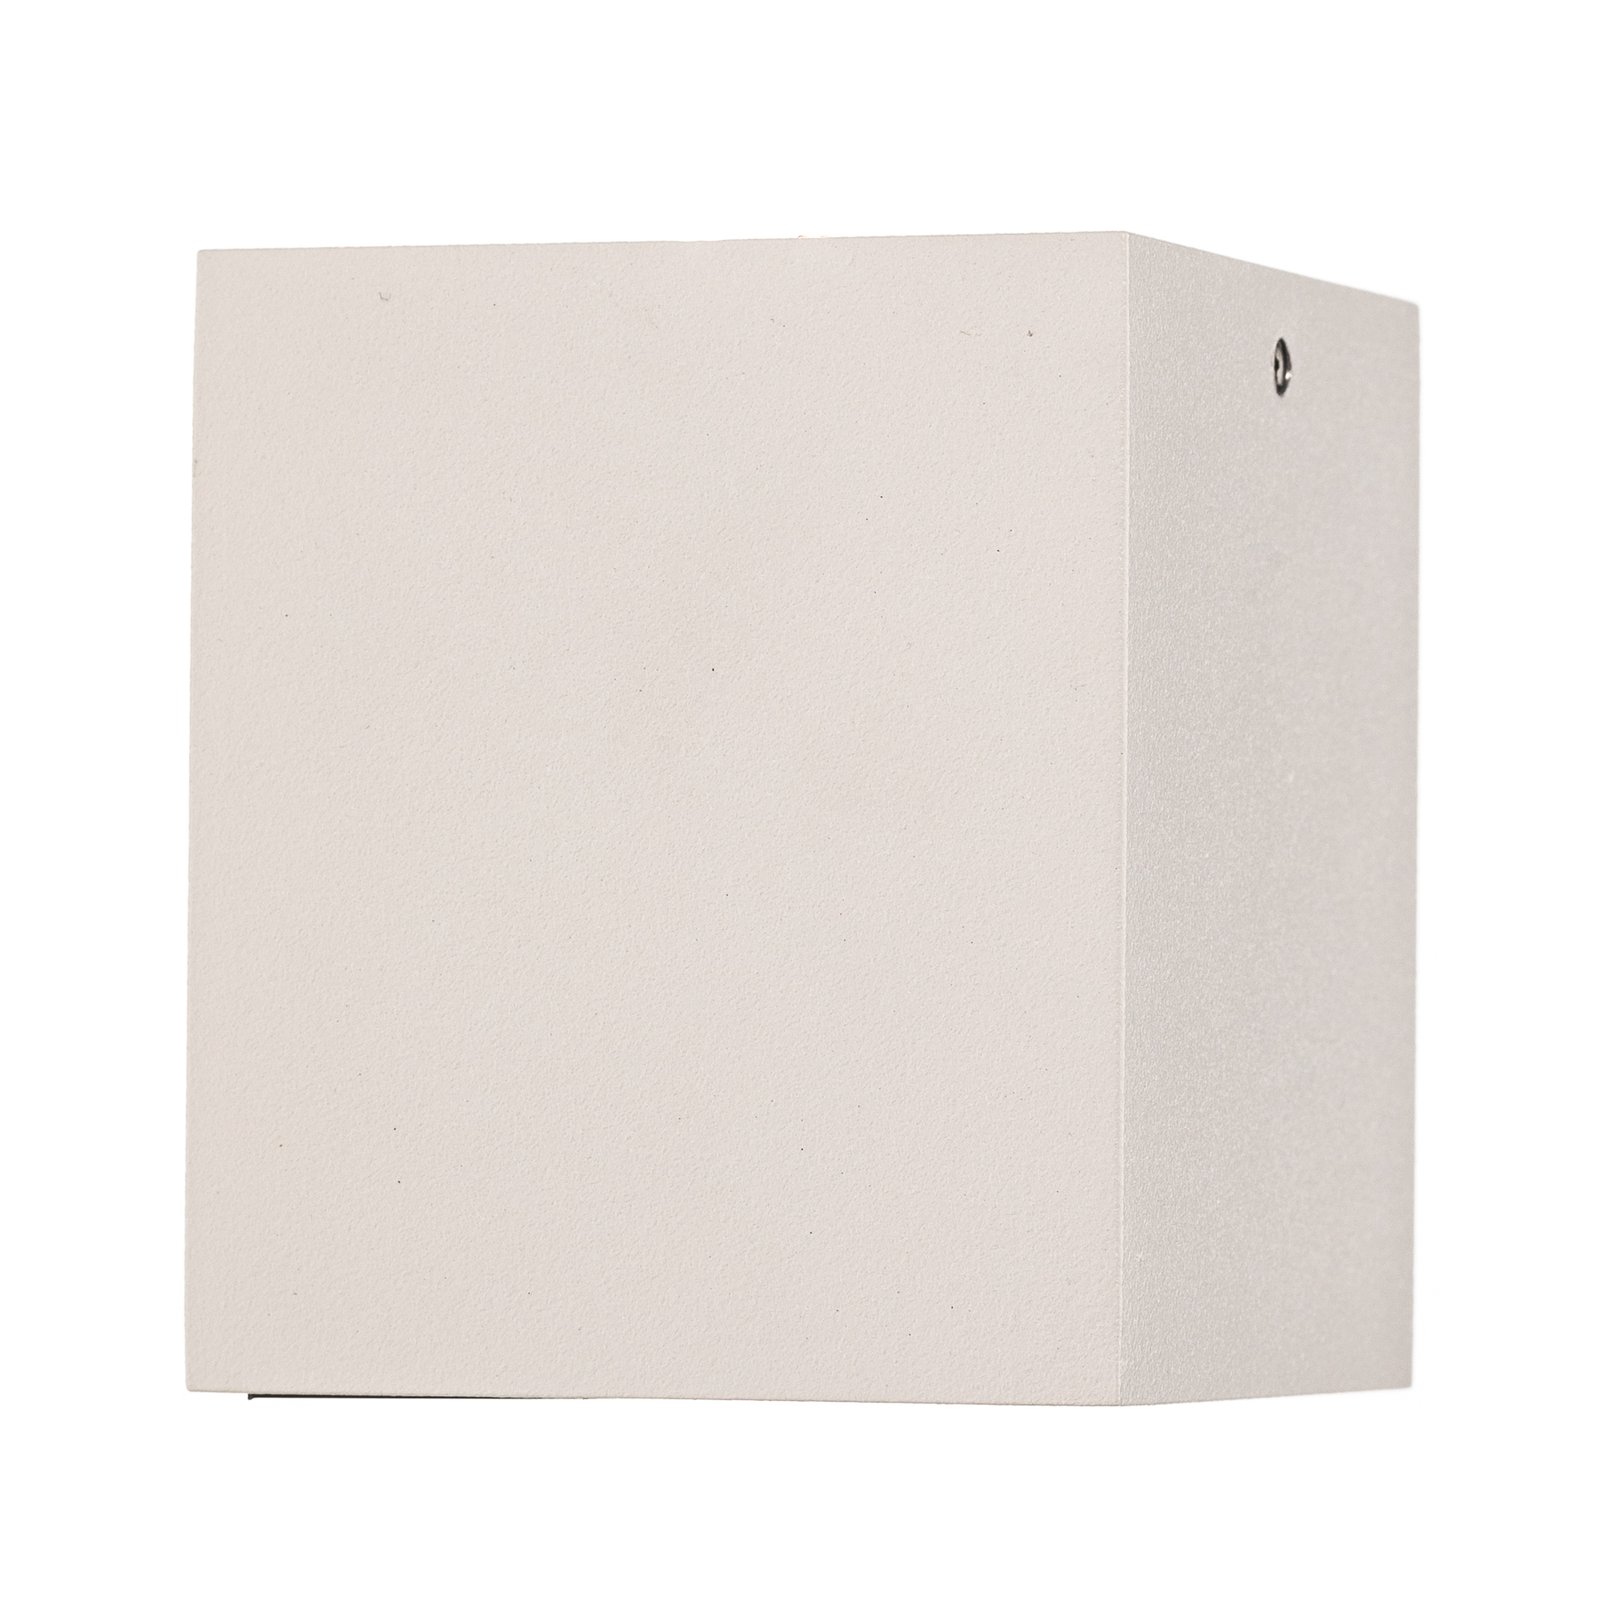 Liro LED-Deckenspot weiß/schwarz 34° 2.700K